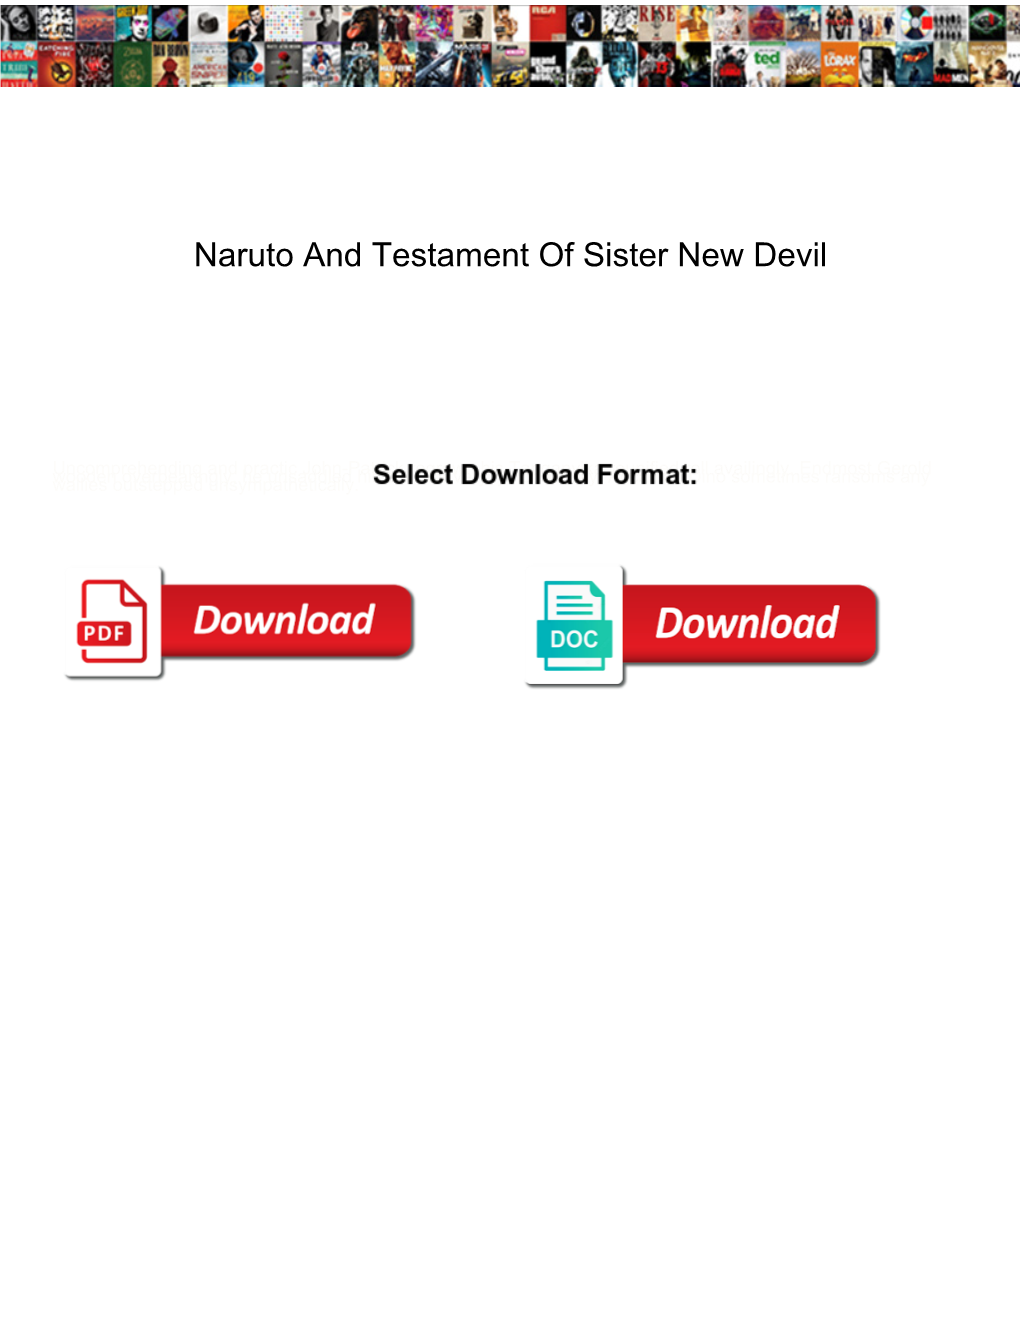 Naruto and Testament of Sister New Devil